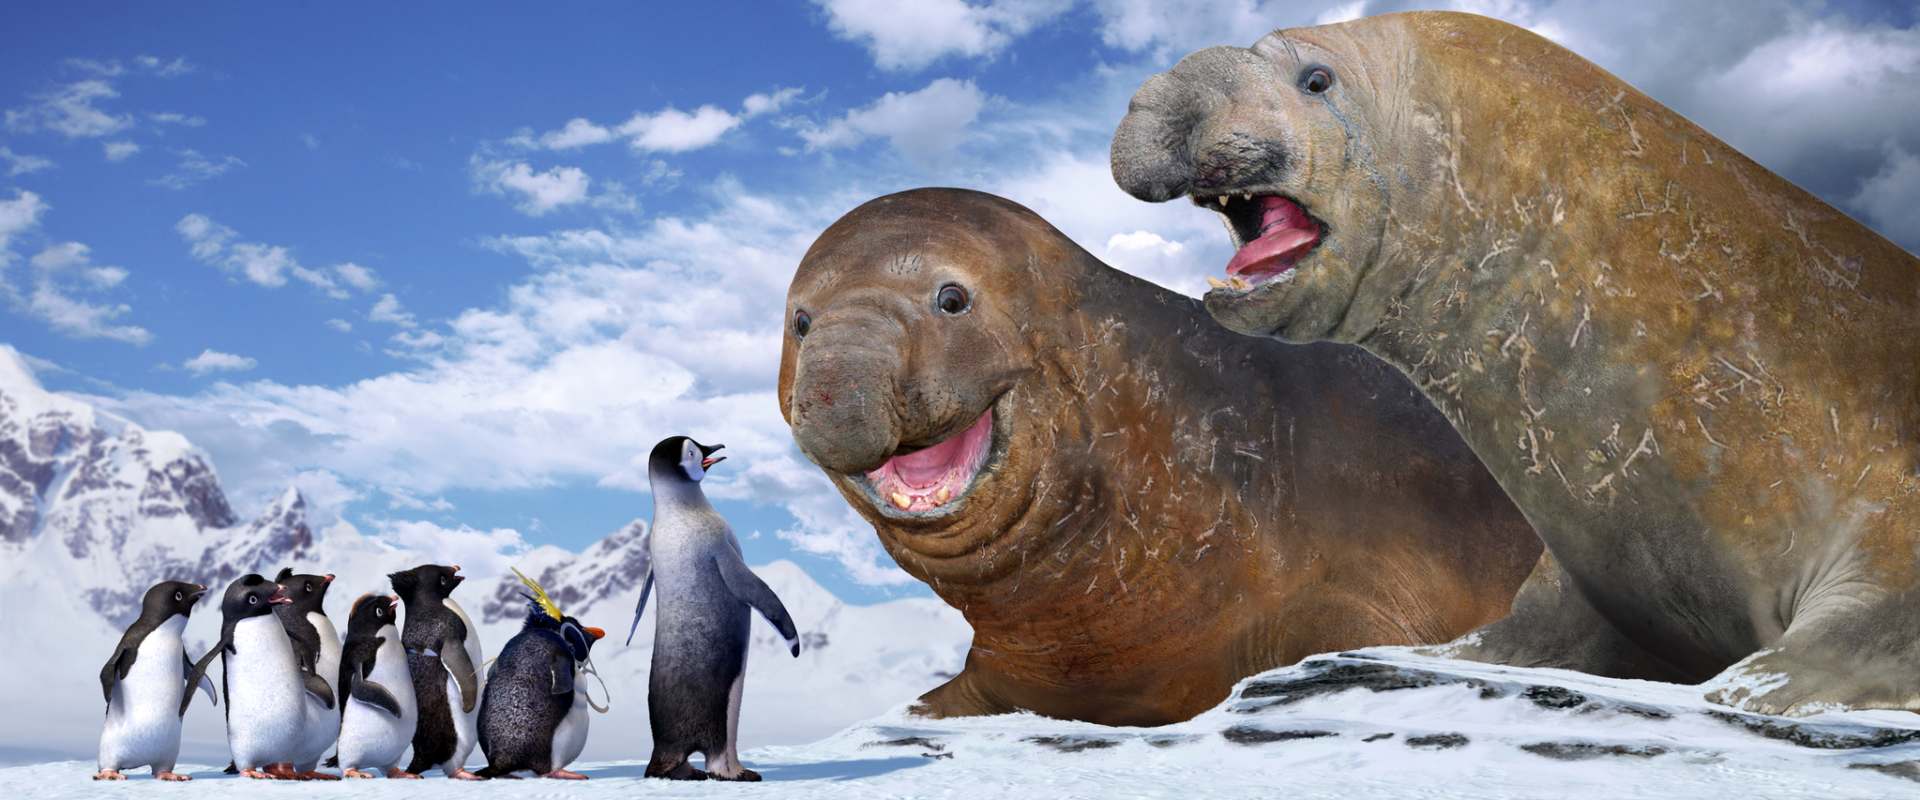 Penguins meet walruses in Happy Feet Two (2011)